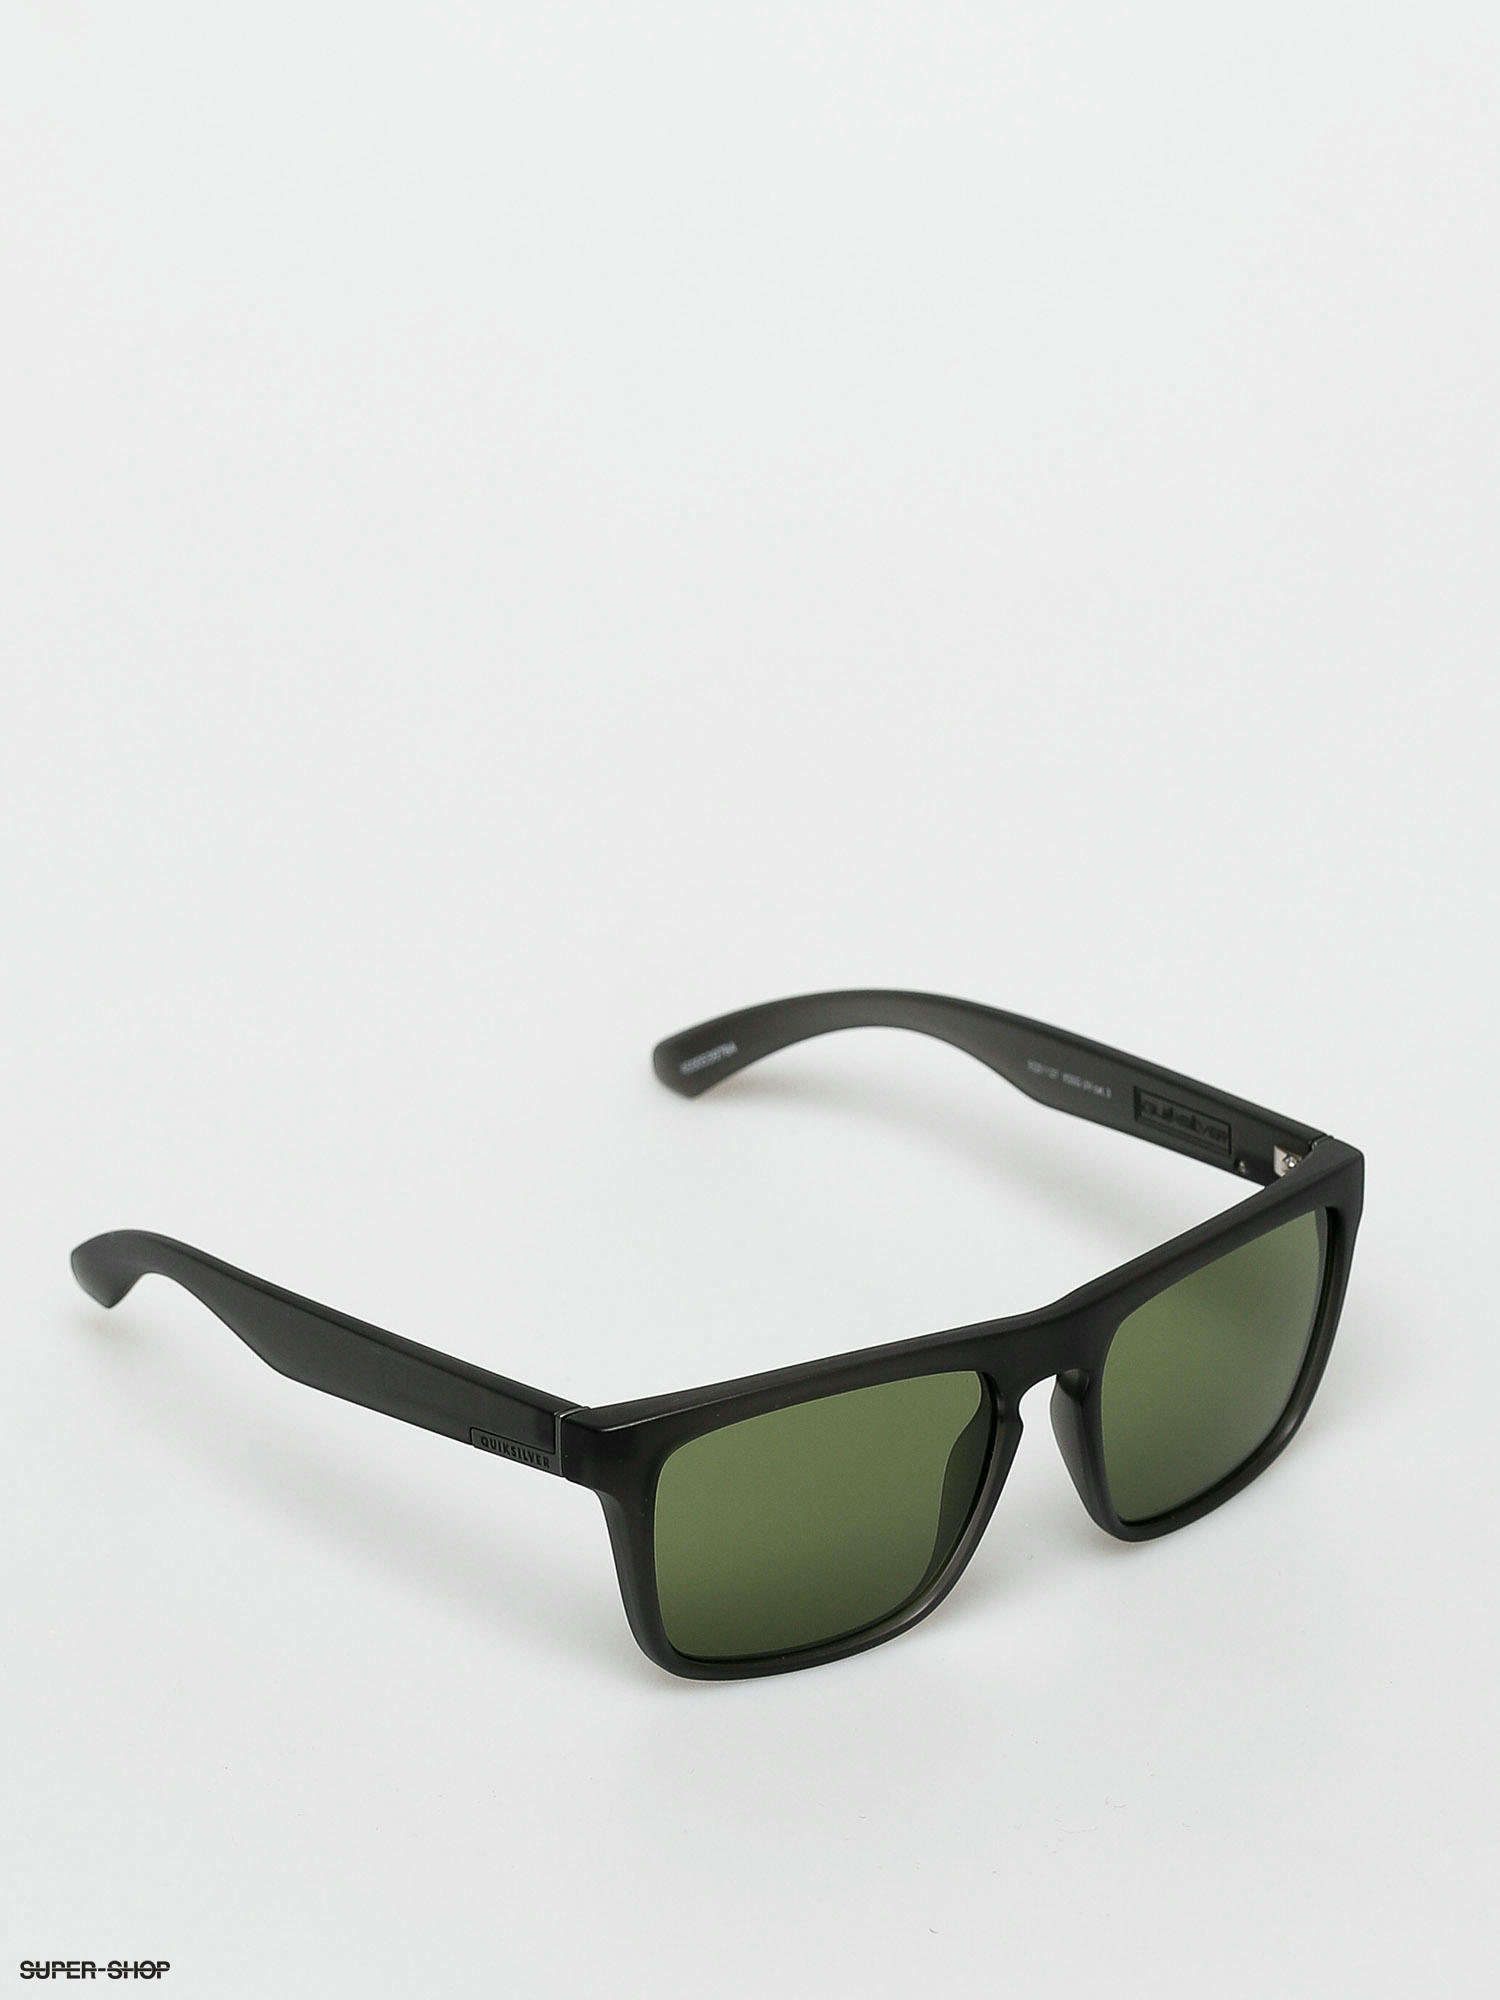 Quiksilver 2023 S/S Sunglasses Preview - Boardsport SOURCE